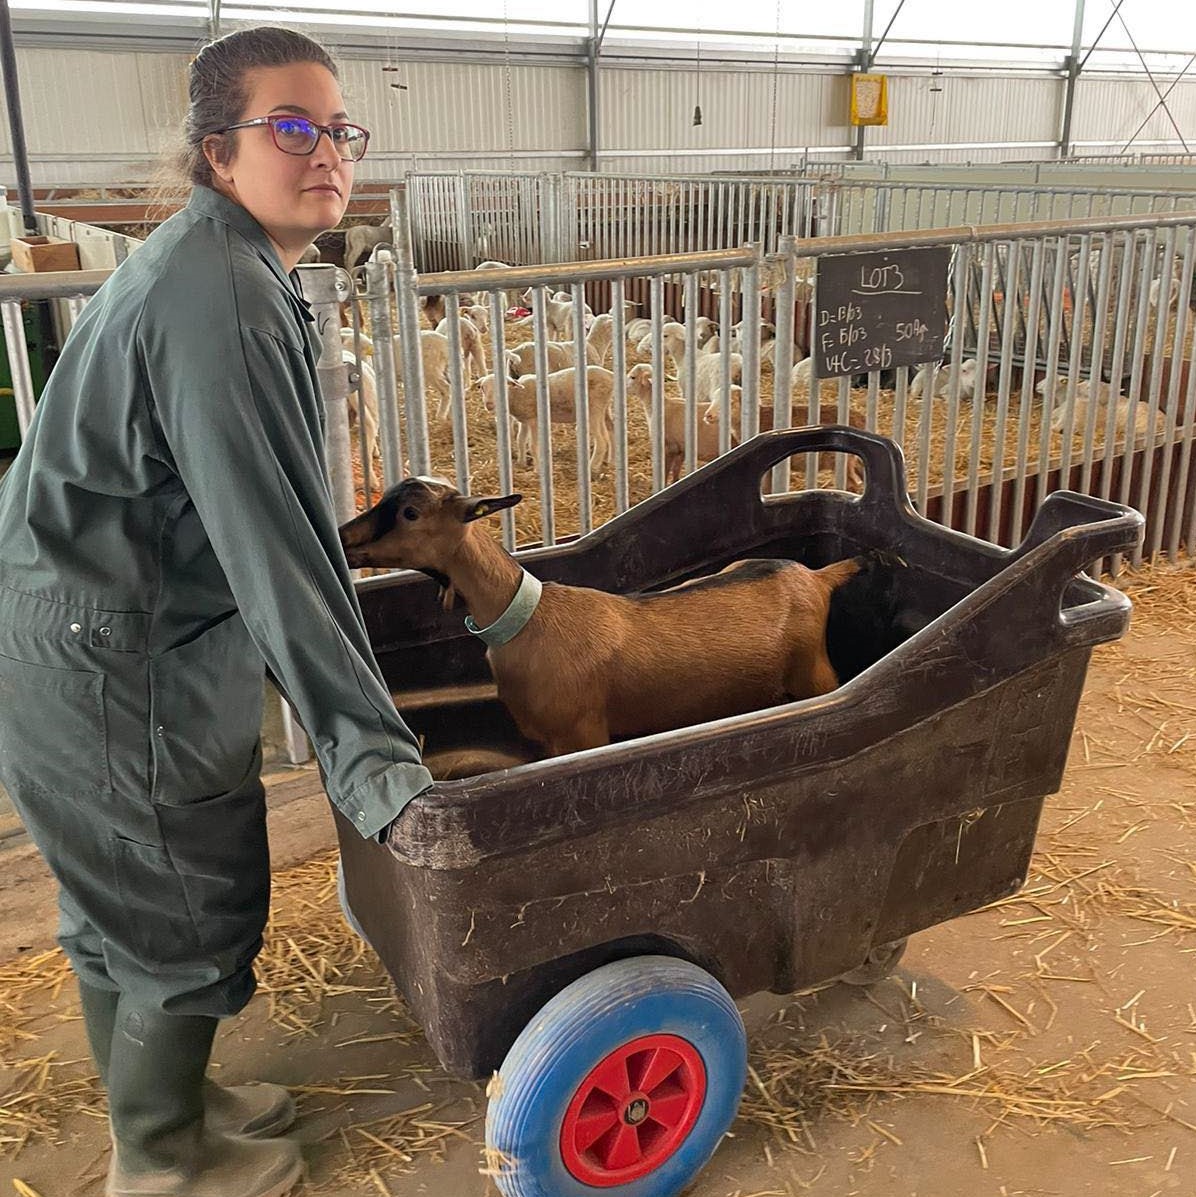 A student inside a farm facility pushes a wheelbarrow with a goat inside.